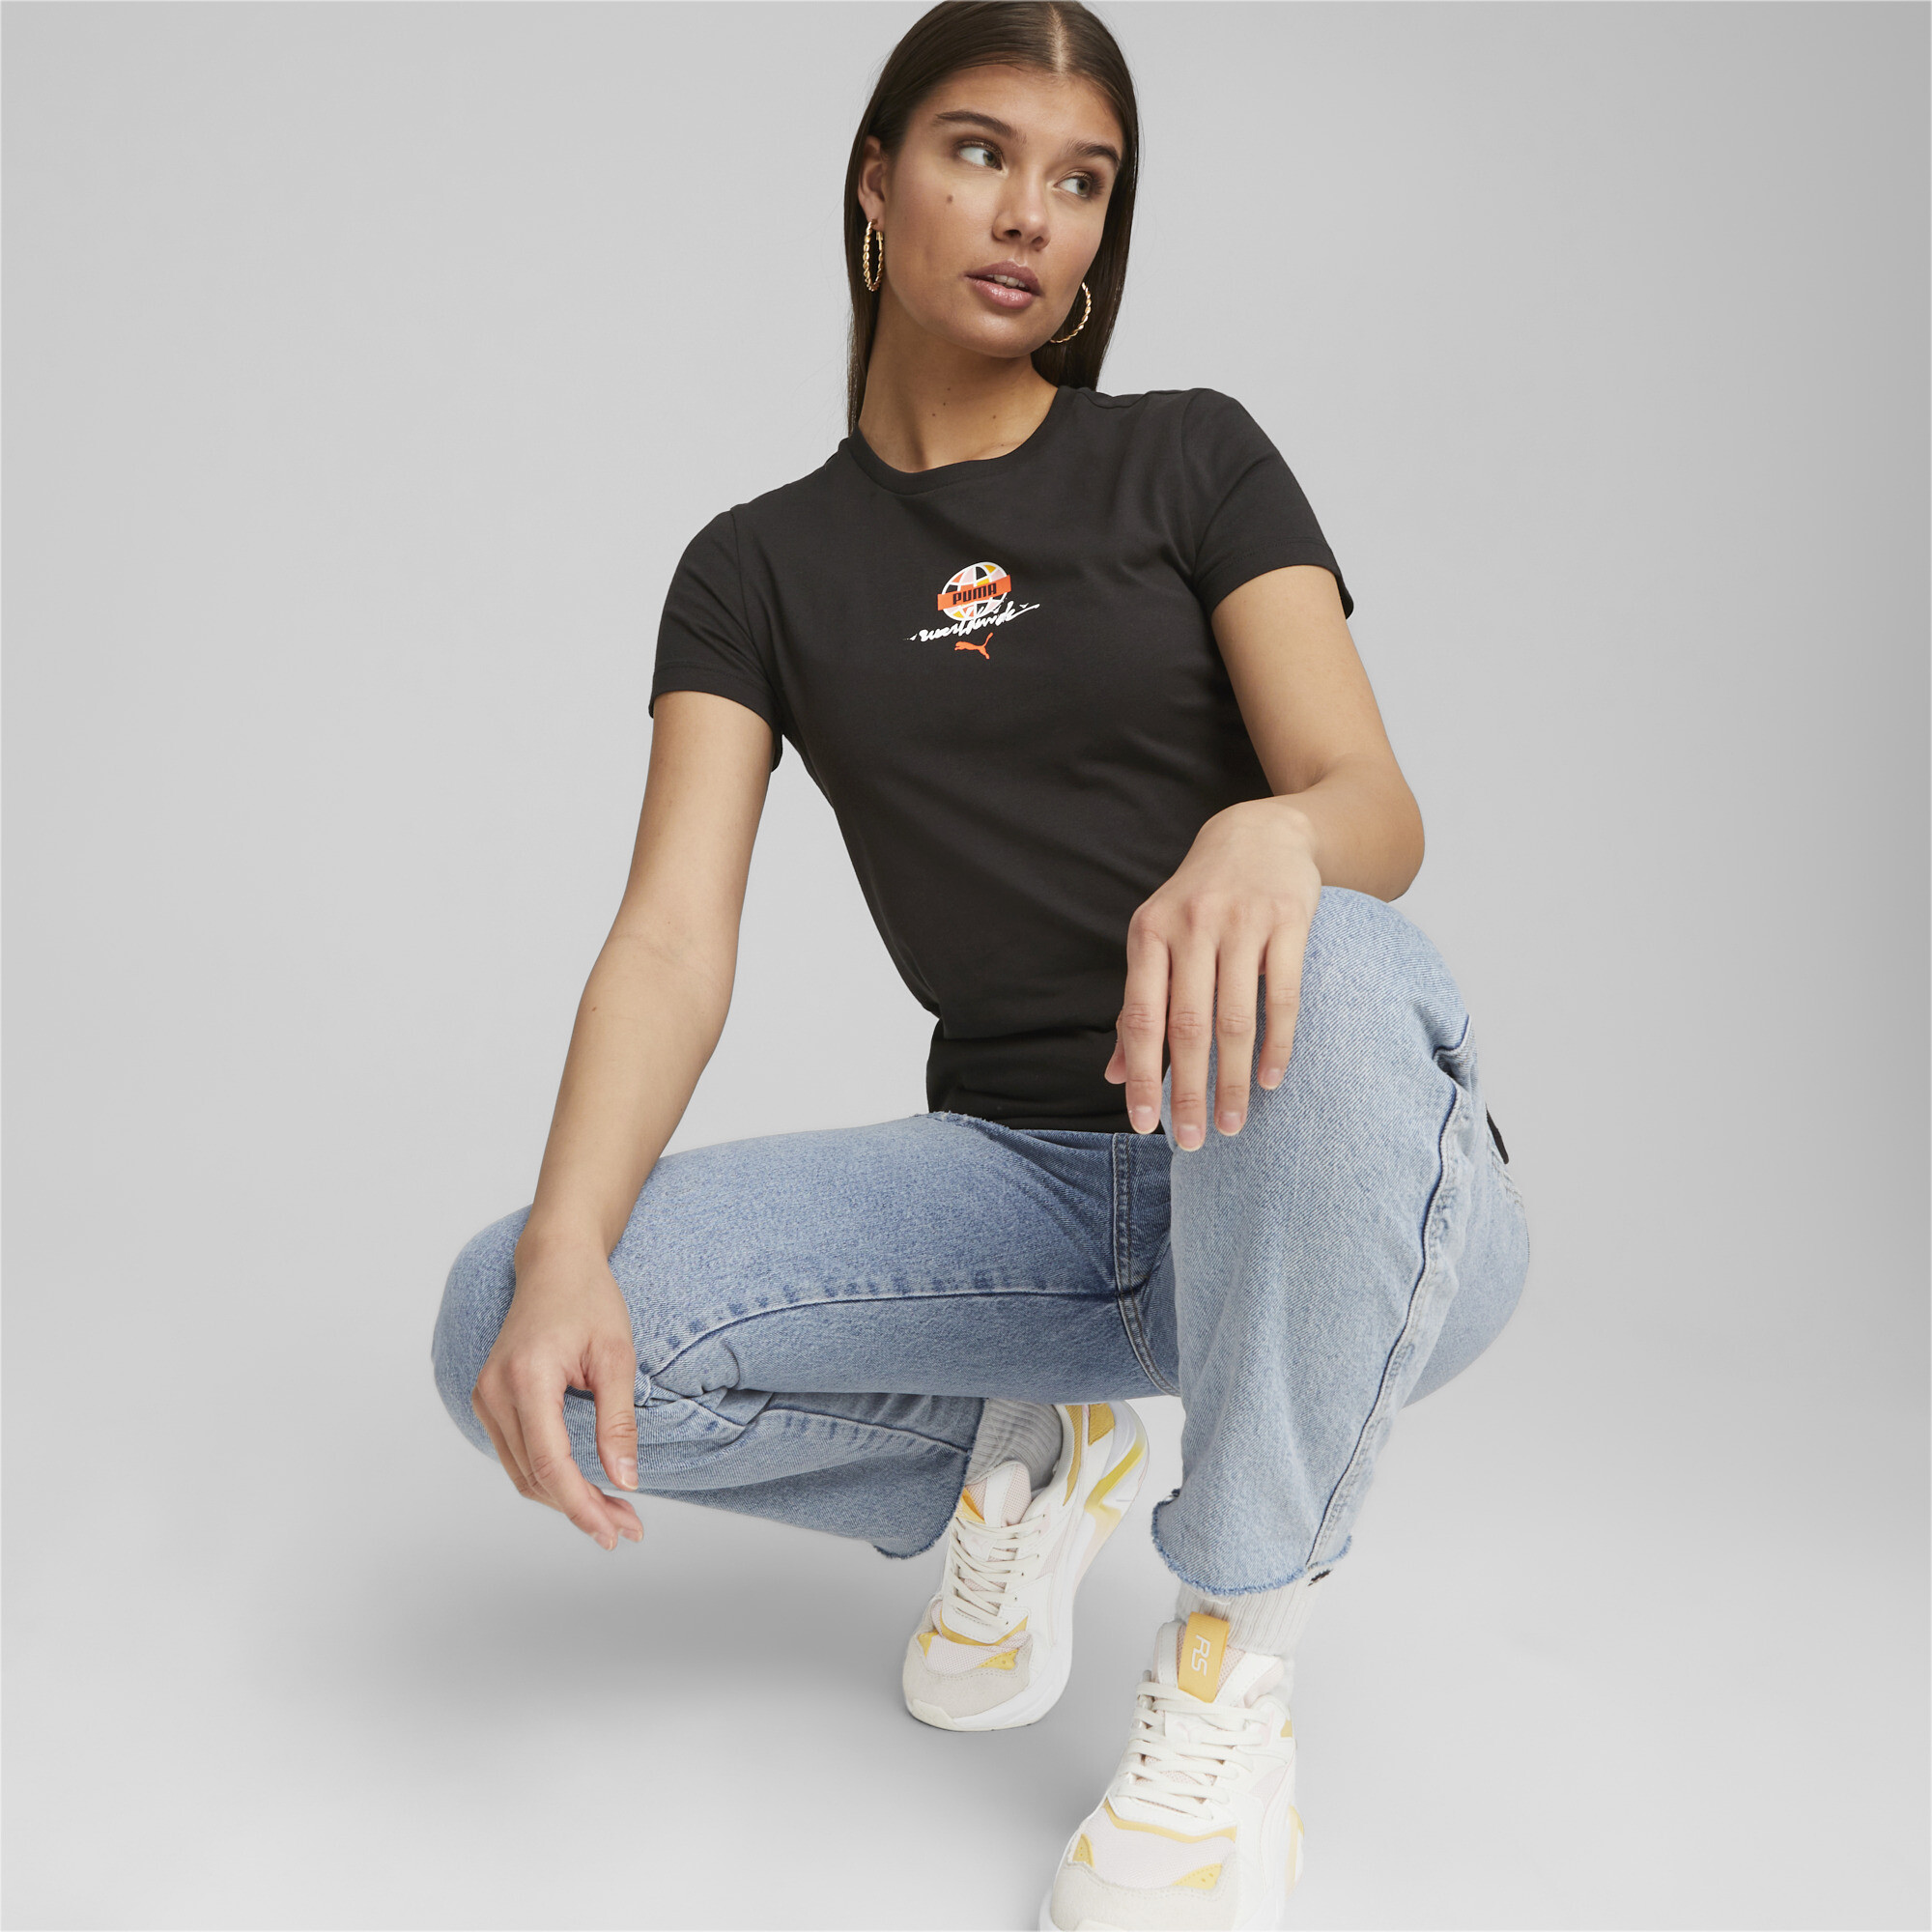 Women's Sportswear By PUMA Graphic T-Shirt In Black, Size Small